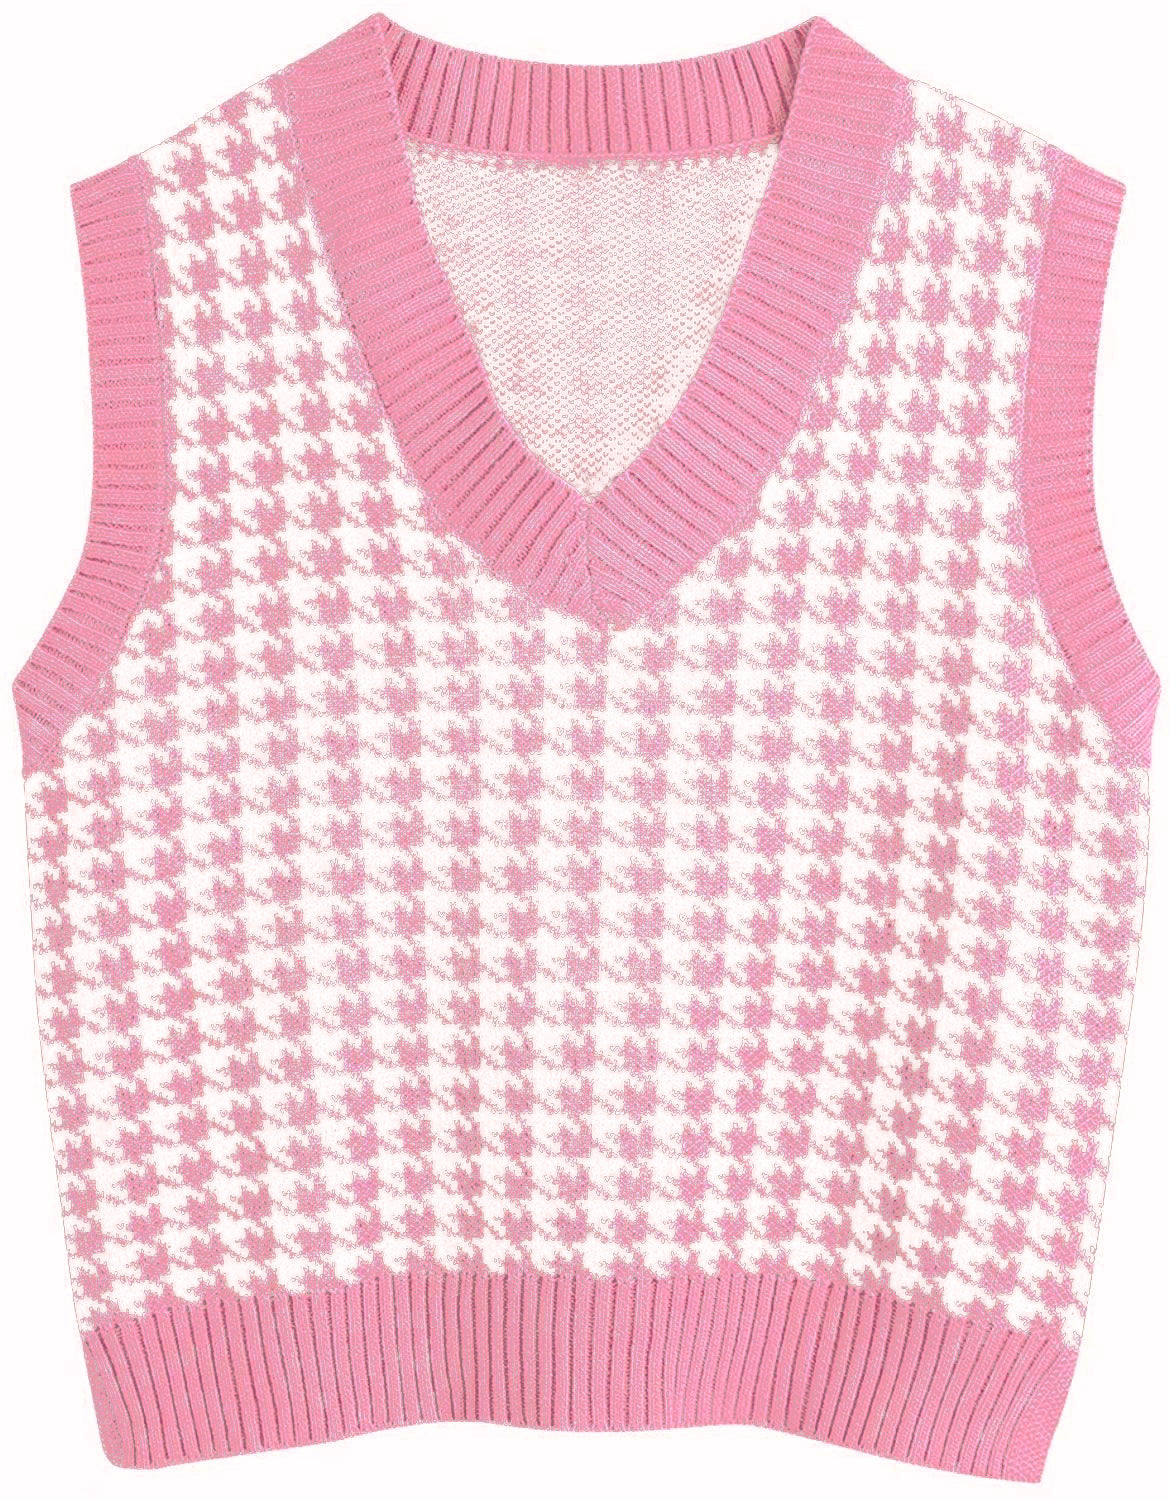 Women's Knitted Vest Loose V-neck Sleeveless Pullover Sweater